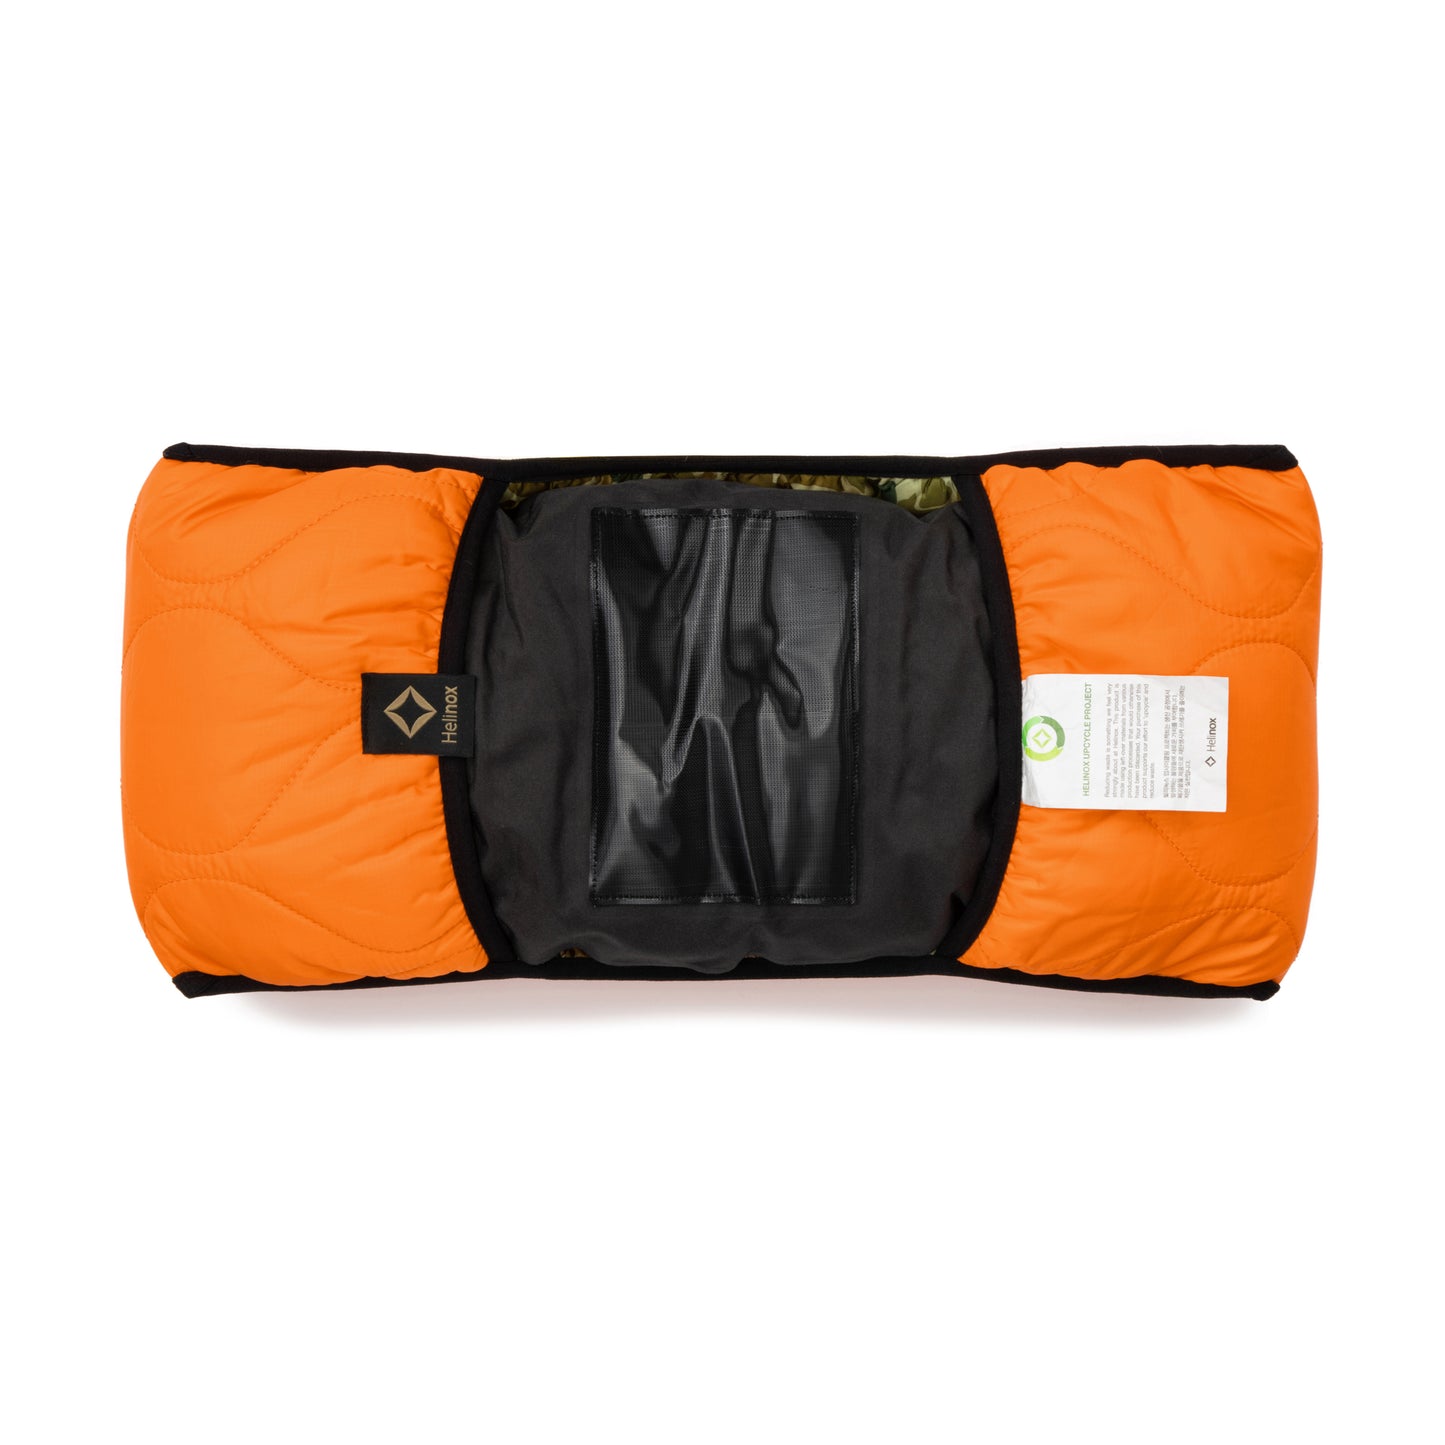 Tac. Headrest Cover / Upcycle ver. - Duck Camo / Orange